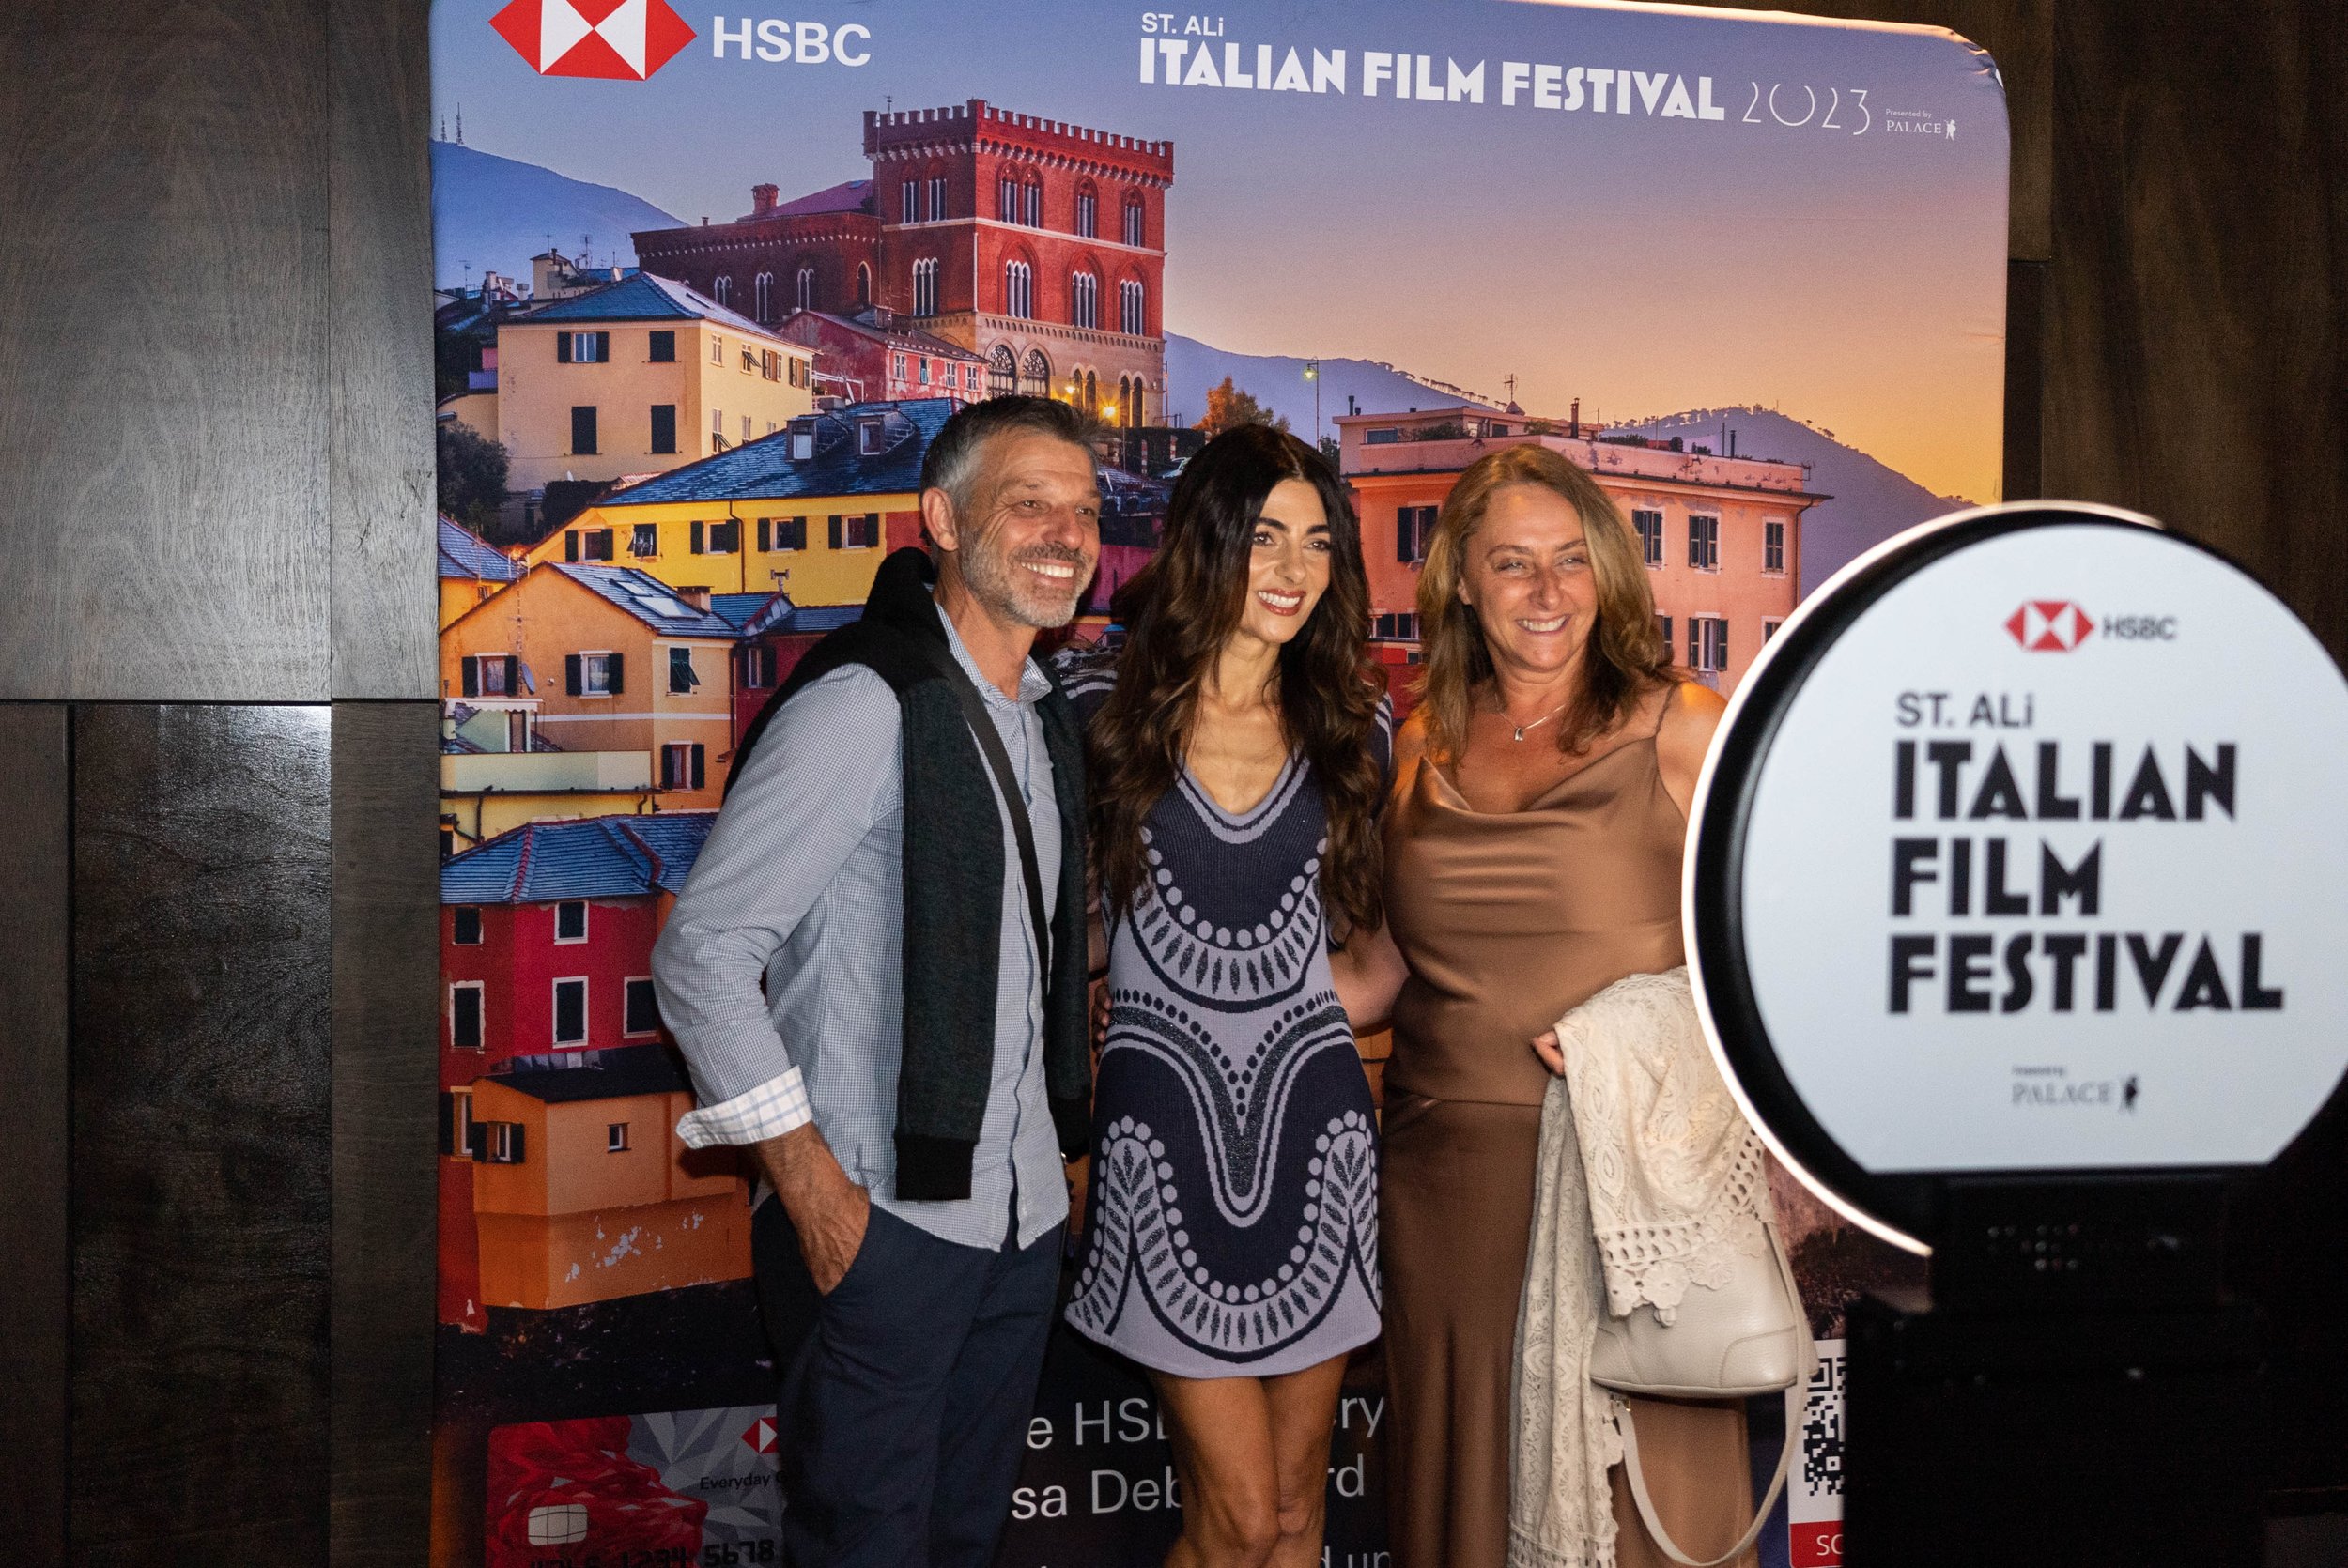 ItalianFilmFestival_HSBC&MazettiActivations-37.jpg